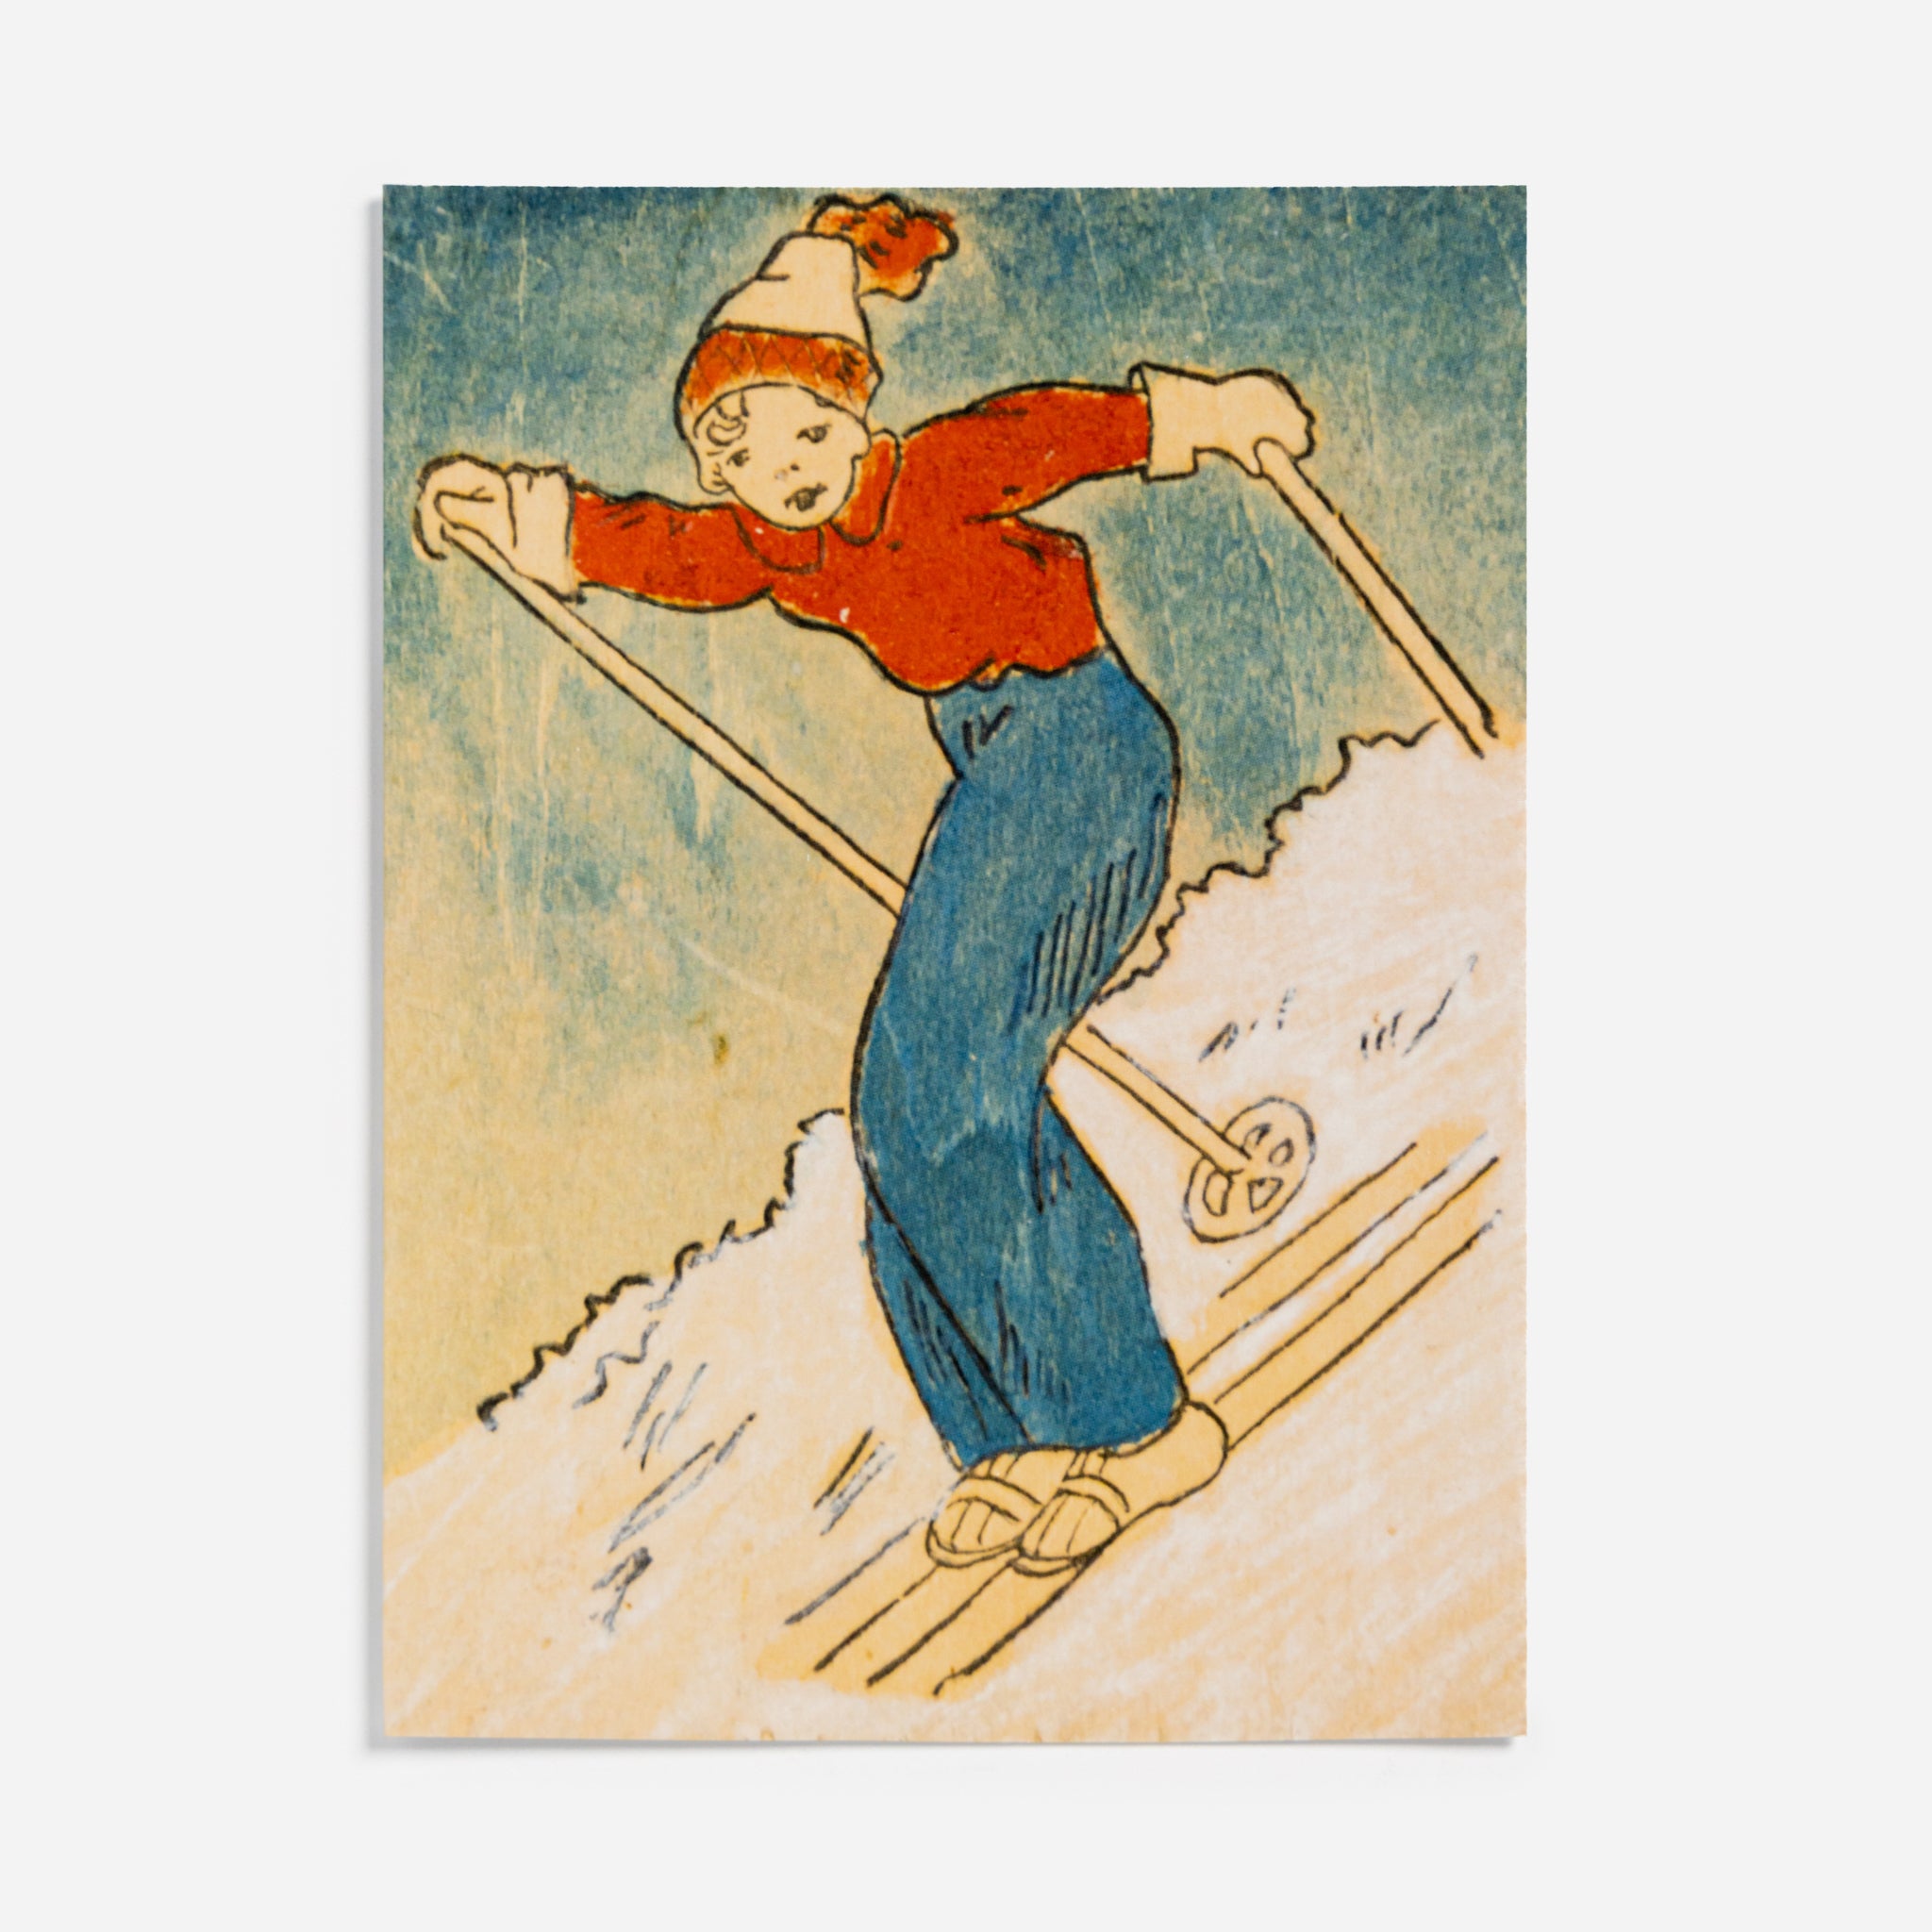 Child On Skis by C.A. Hendrickson  - Vesterheim Collection Card Set